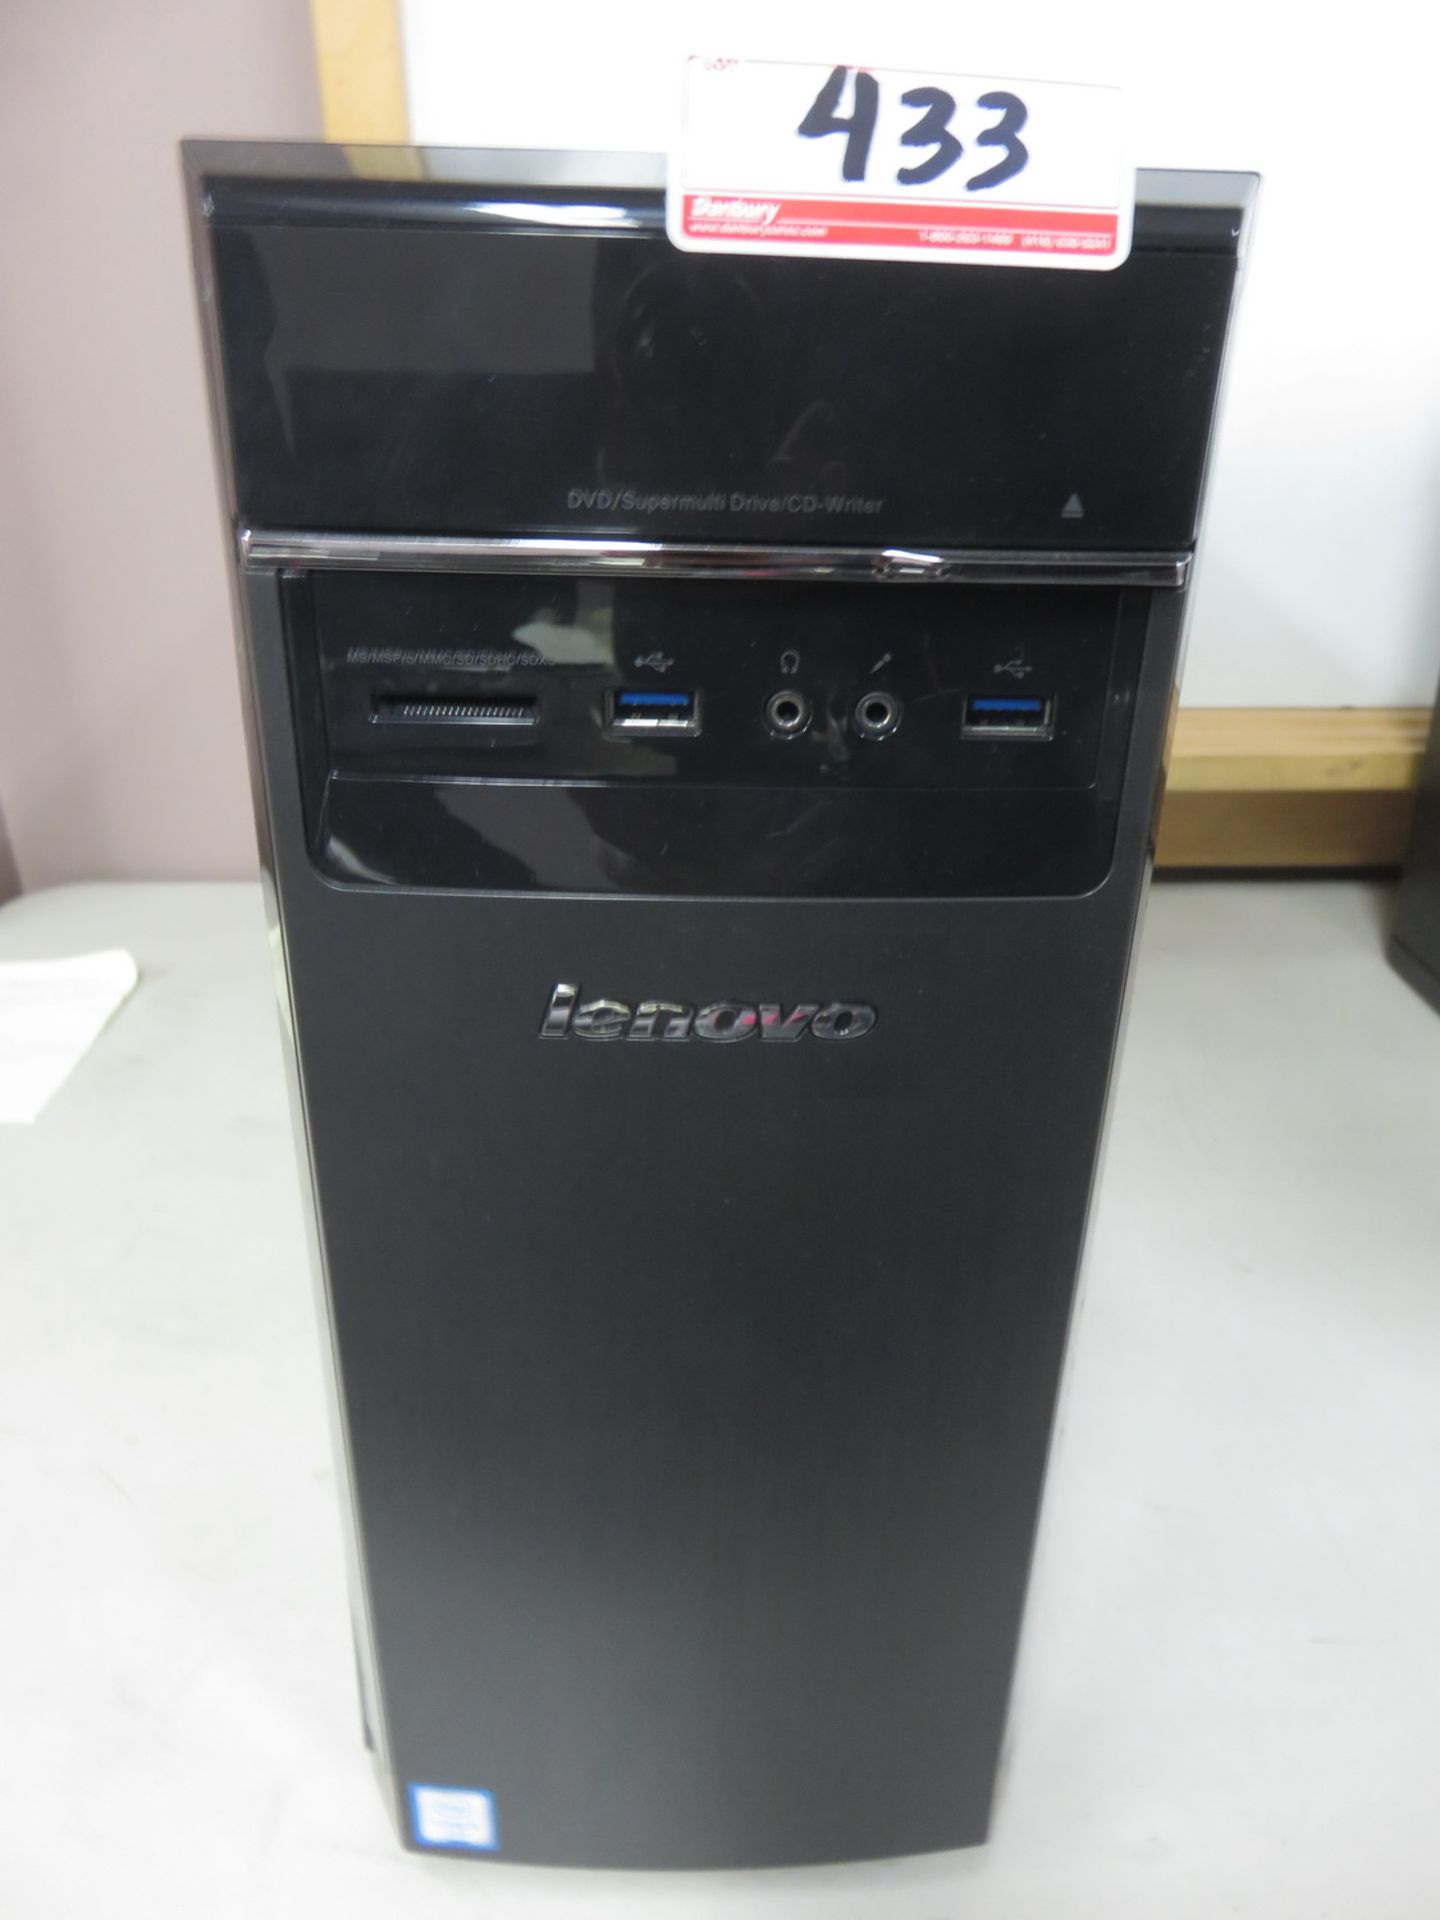 LENOVO DESKTOP PC W/ INTEL CORE I3-6100 3.7GHZ PROCESSOR, 8GB RAM, 1TB HDD